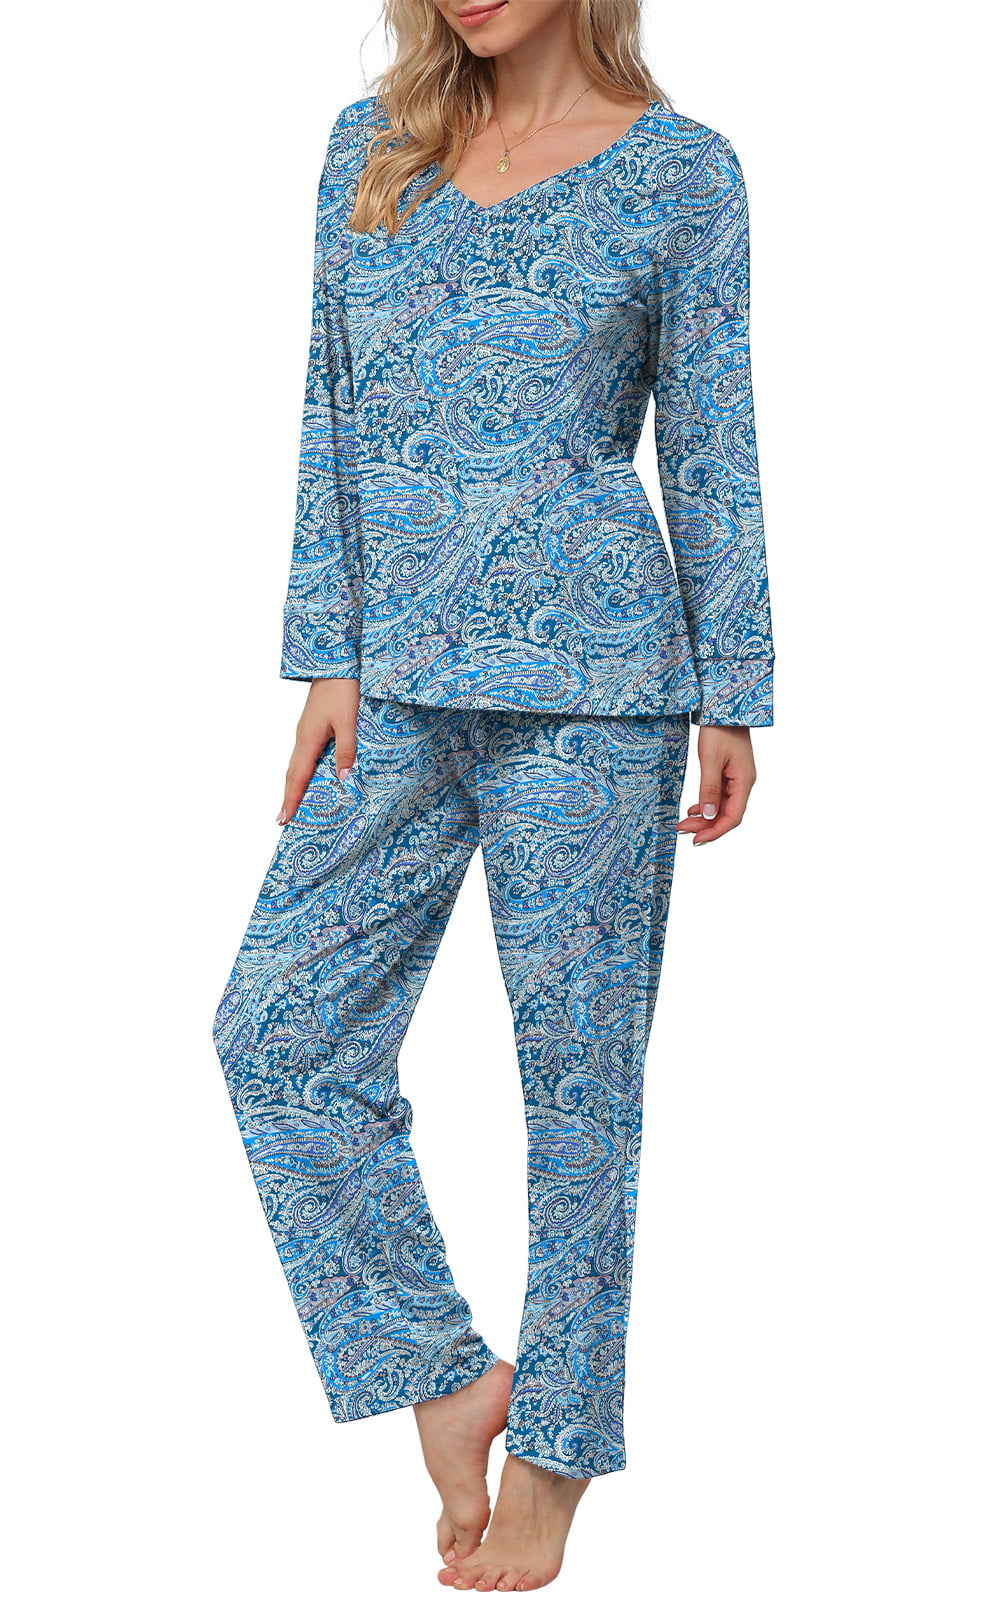 Anygrew Women's Pajamas Set Long Sleeve Shirts and Long Pants 2 Piece Pjs  Sleepwear with Pockets 